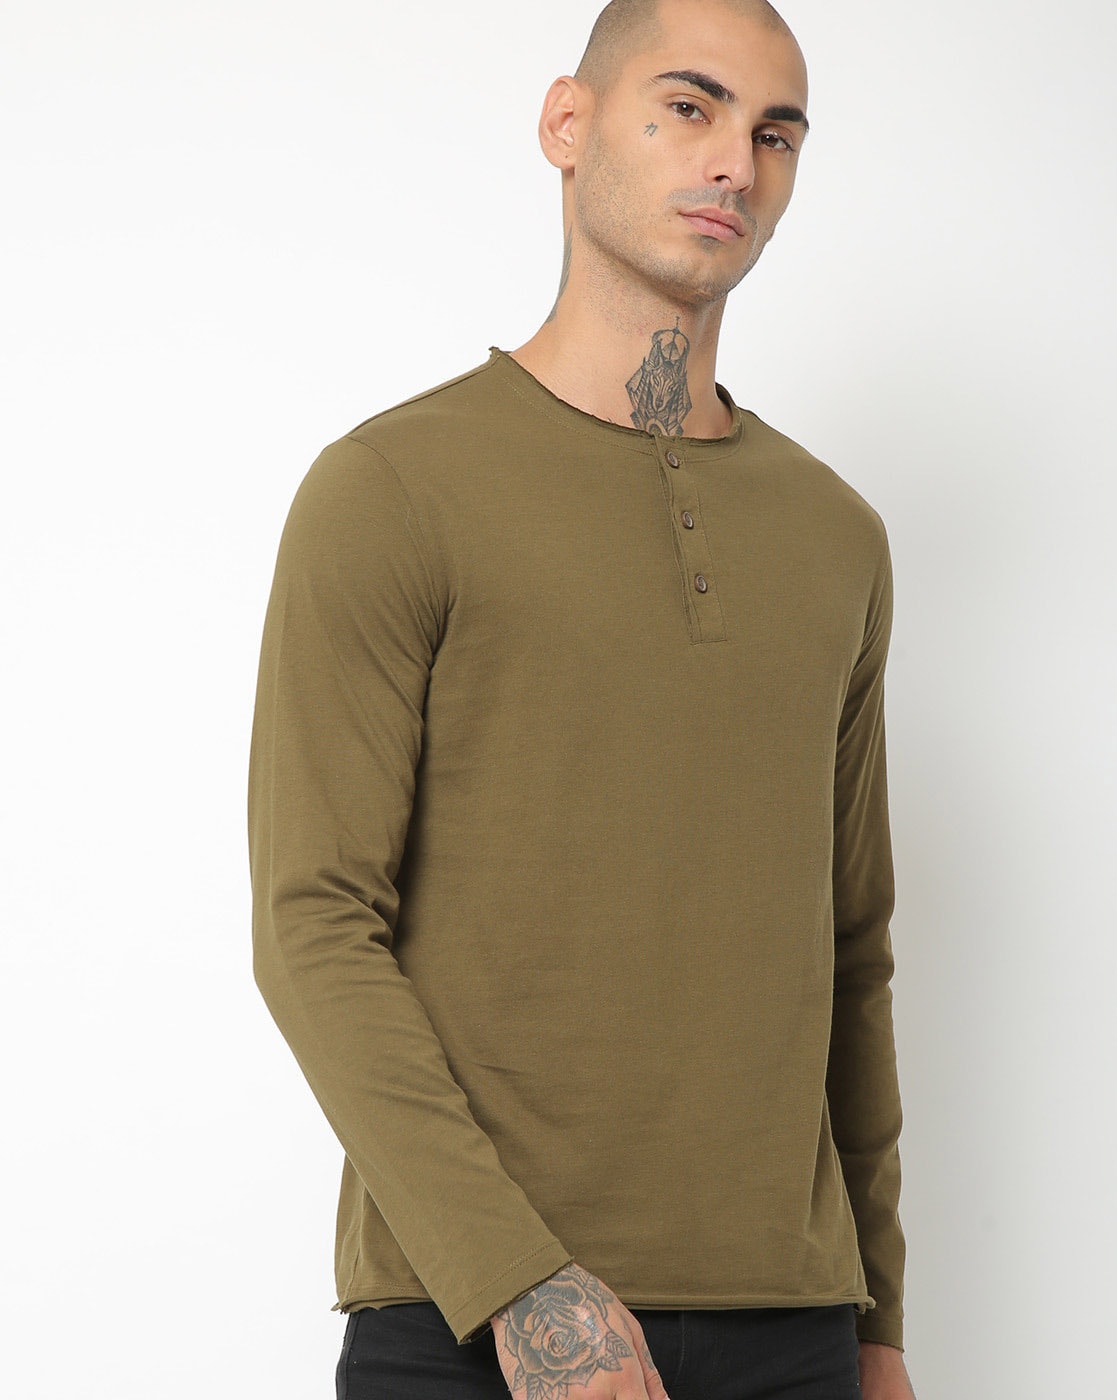 Buy Army Green Tshirts for Men LEVIS Online | Ajio.com